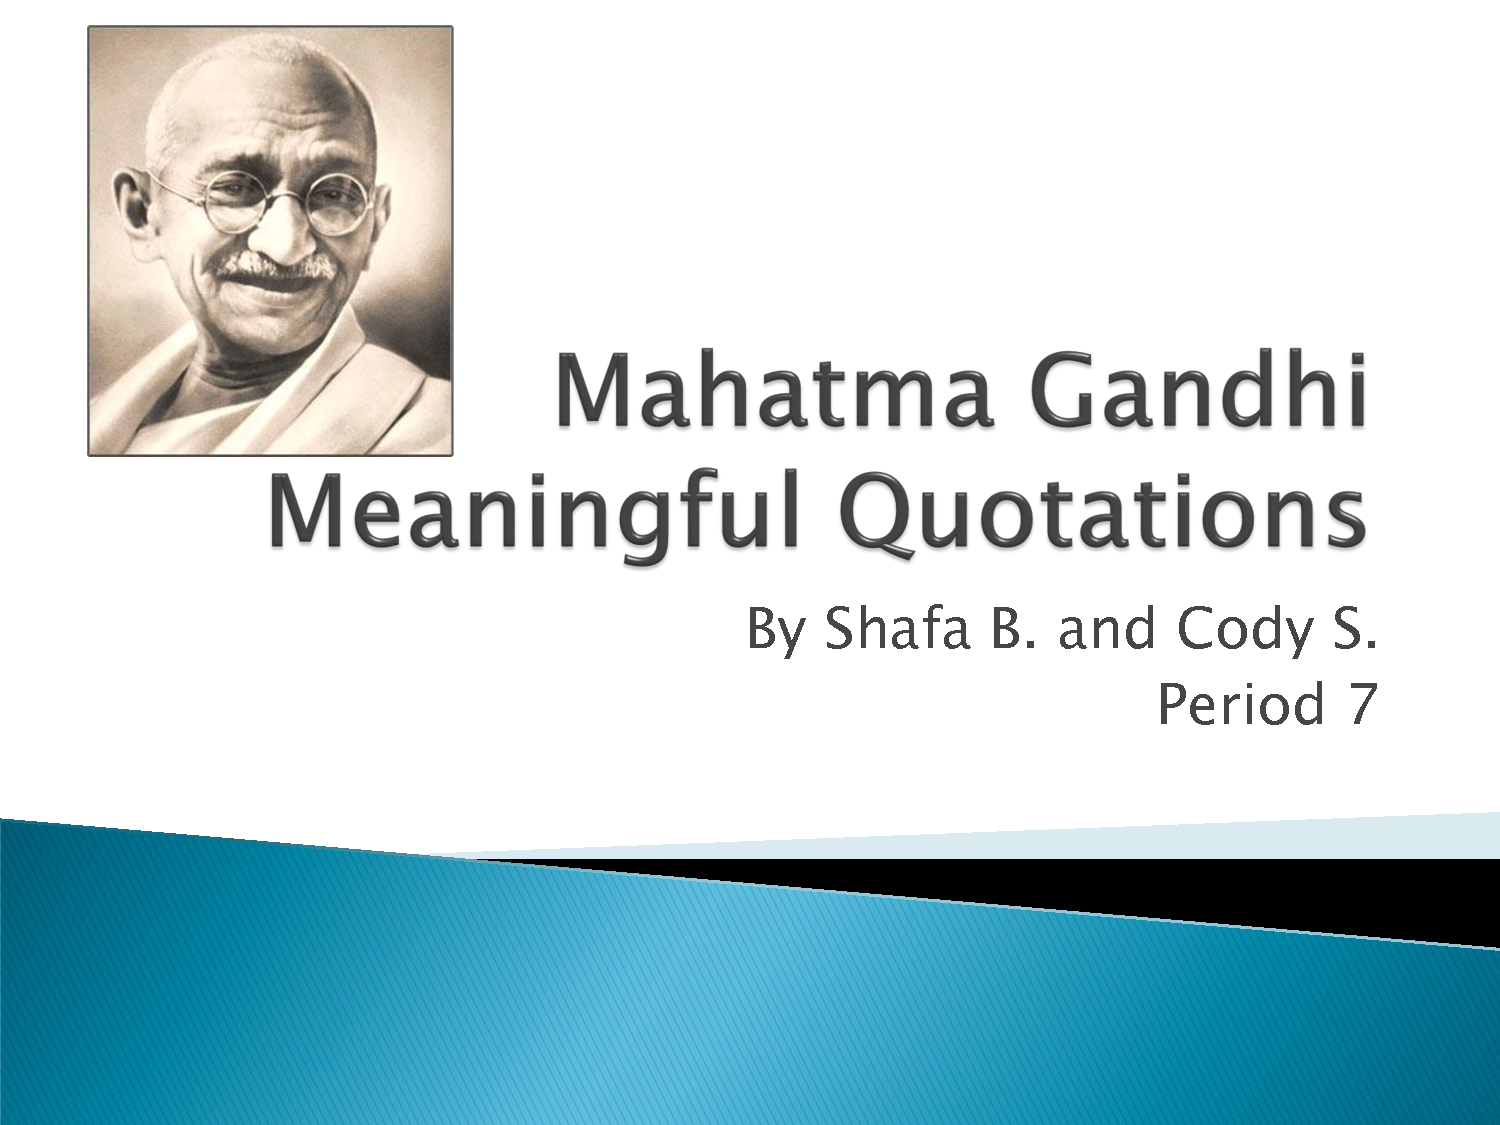 Leadership Quotes By Gandhi. QuotesGram